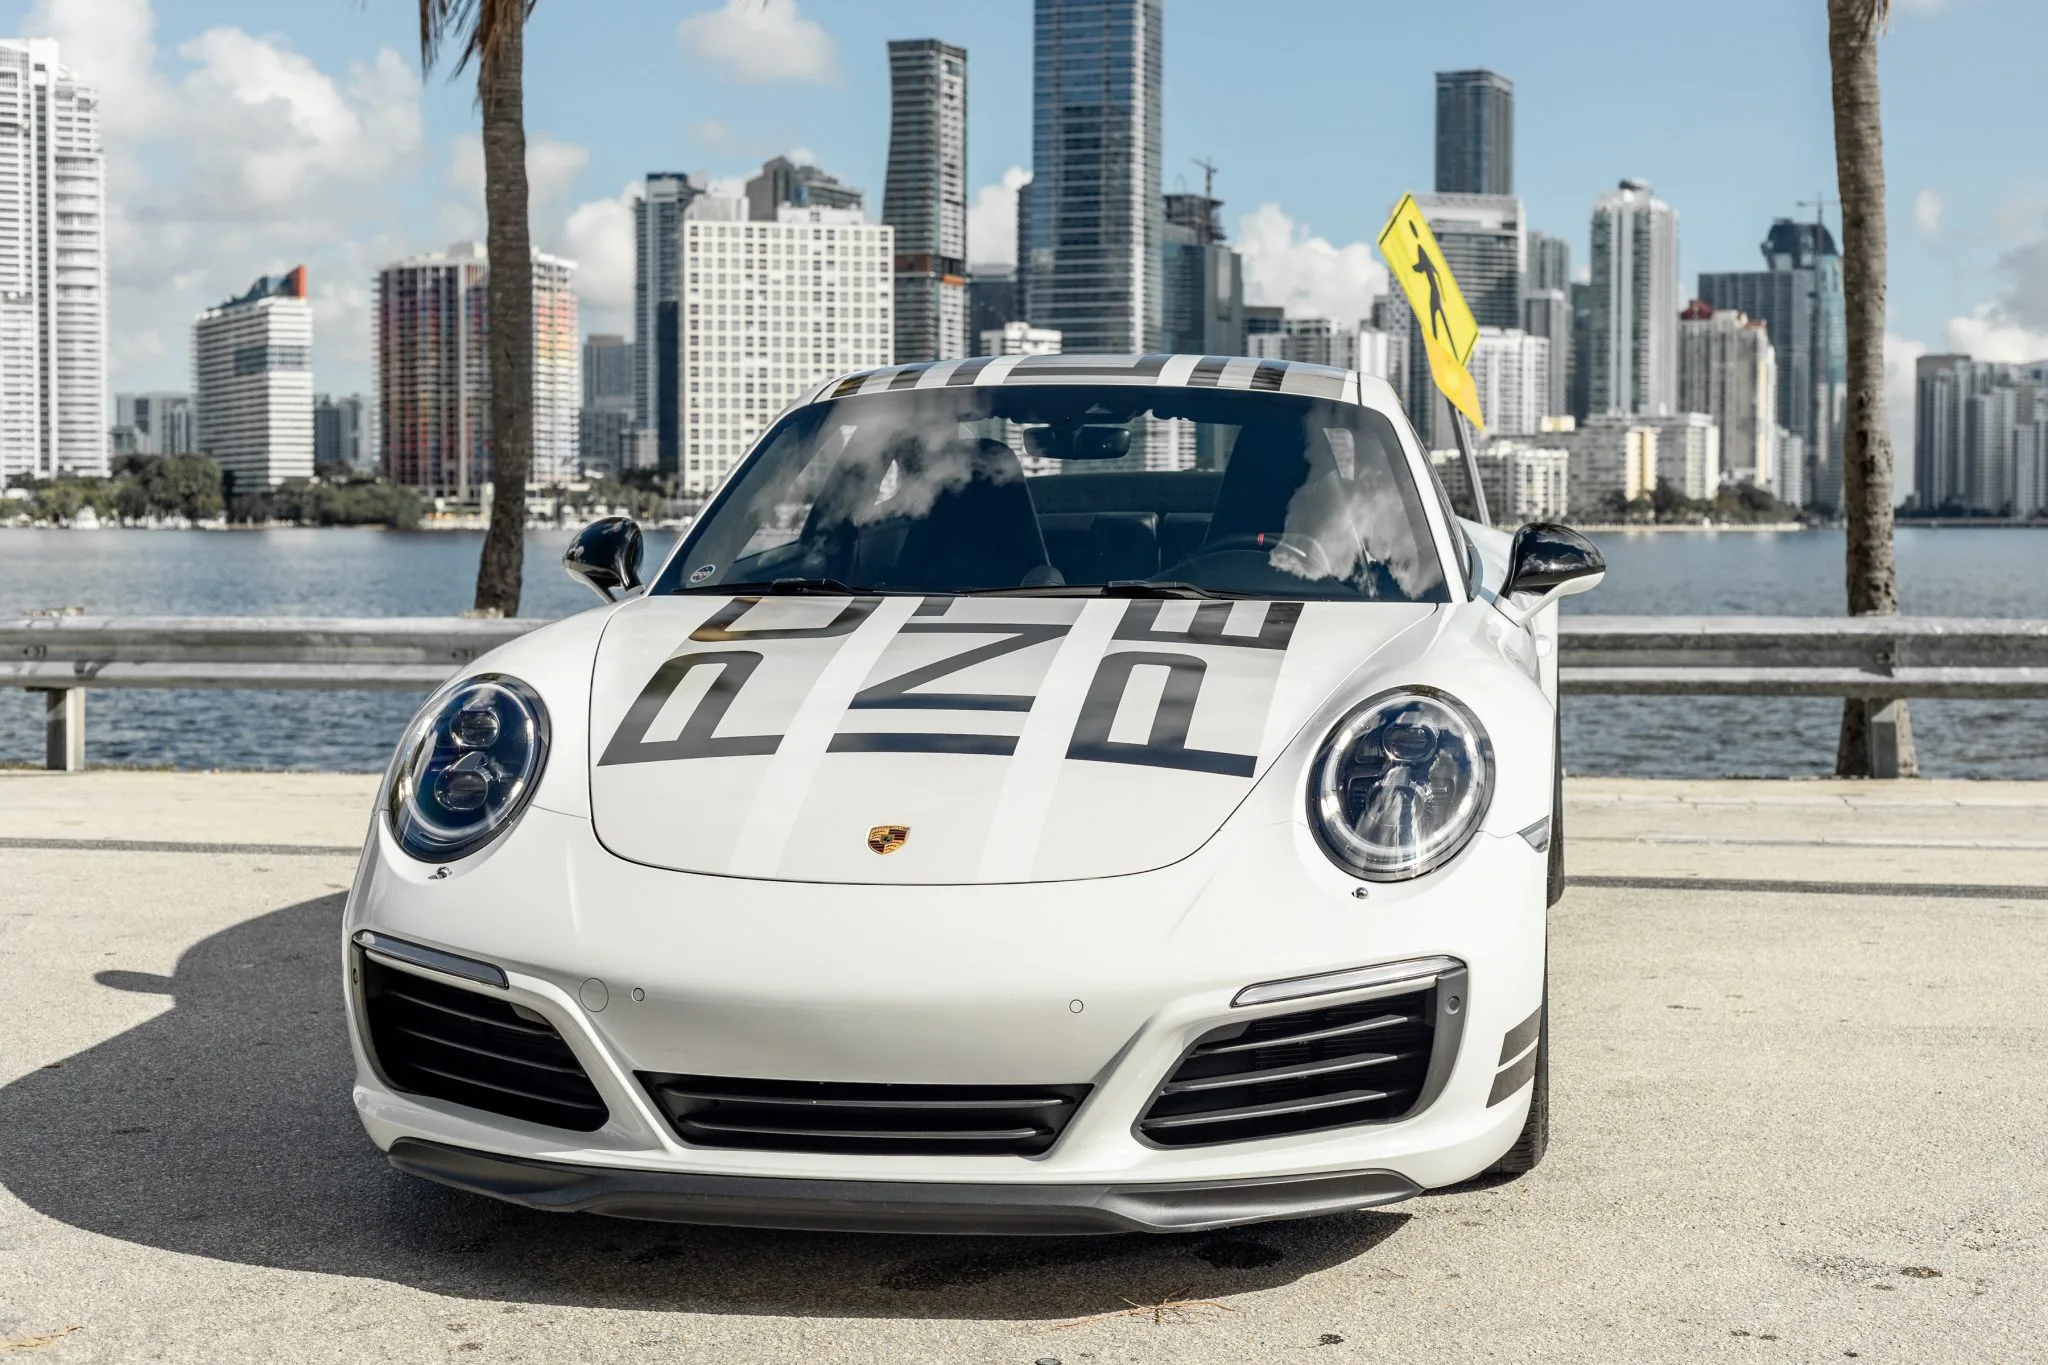 For Sale: Fabulous 2017 Porsche 911 Carrera S Endurance Racing Edition